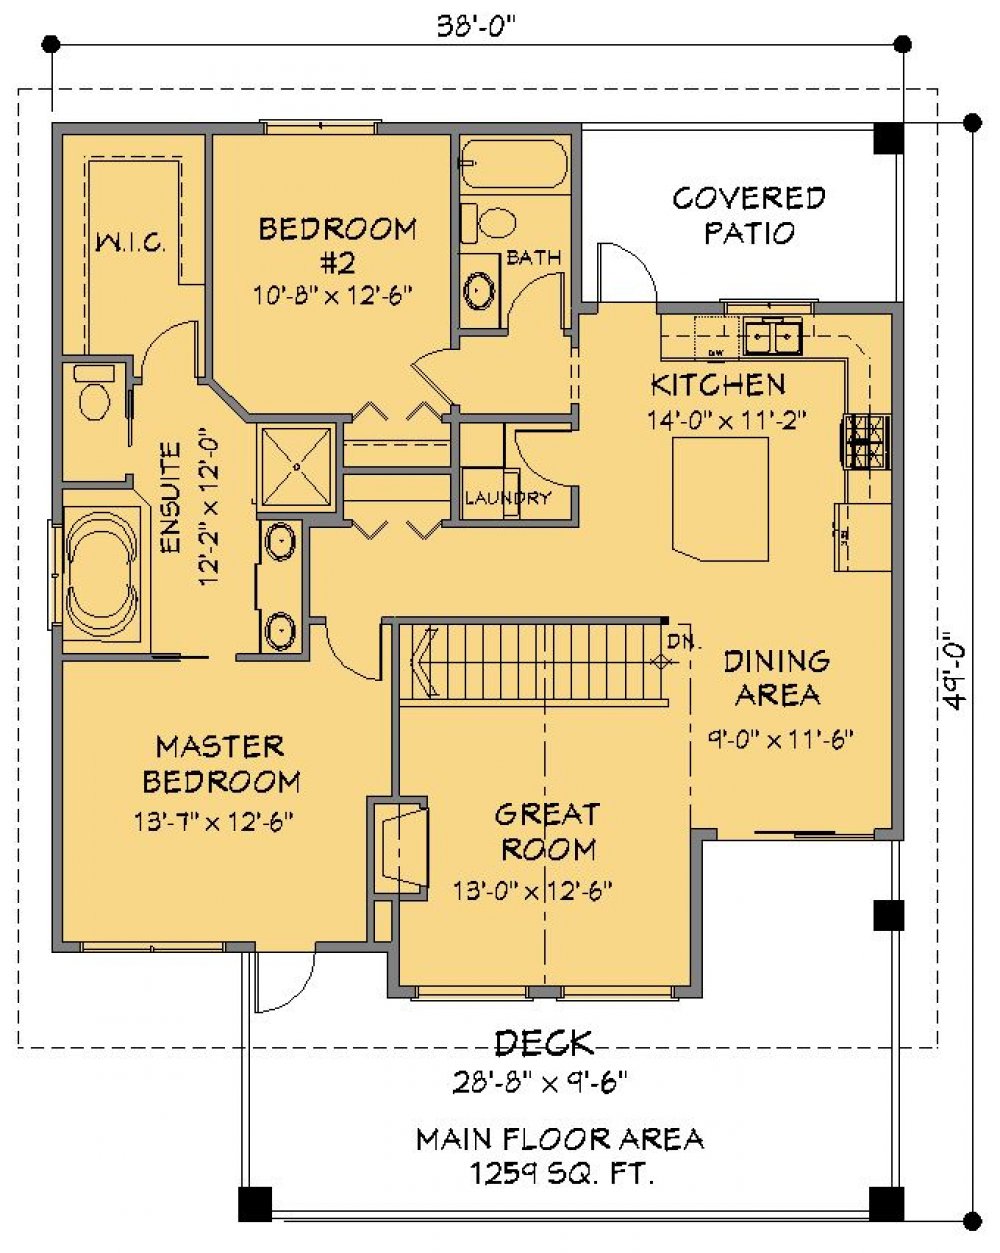 House Plan E1236-10 Main Floor Plan